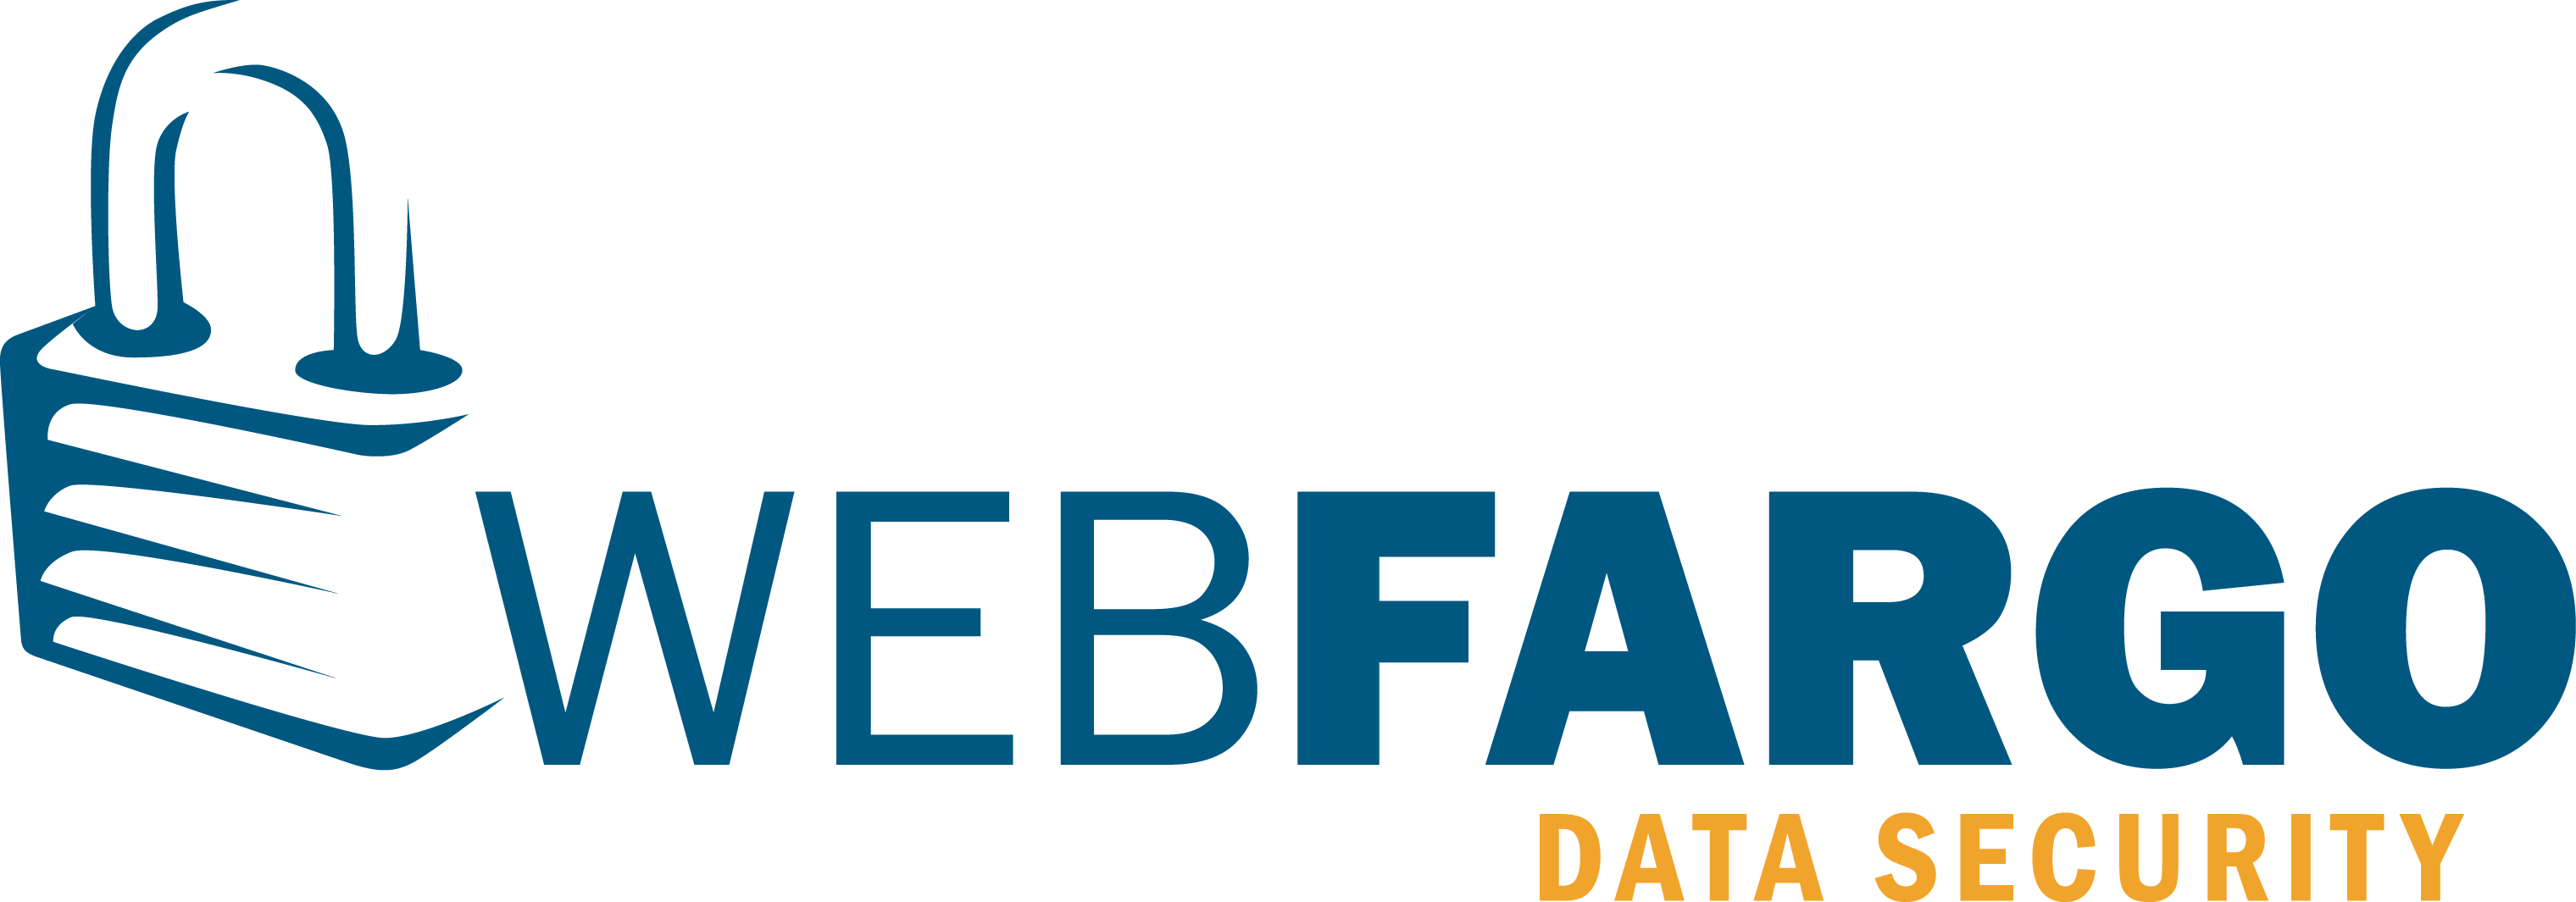 Webfargo Data Security - Cybersecurity Logo